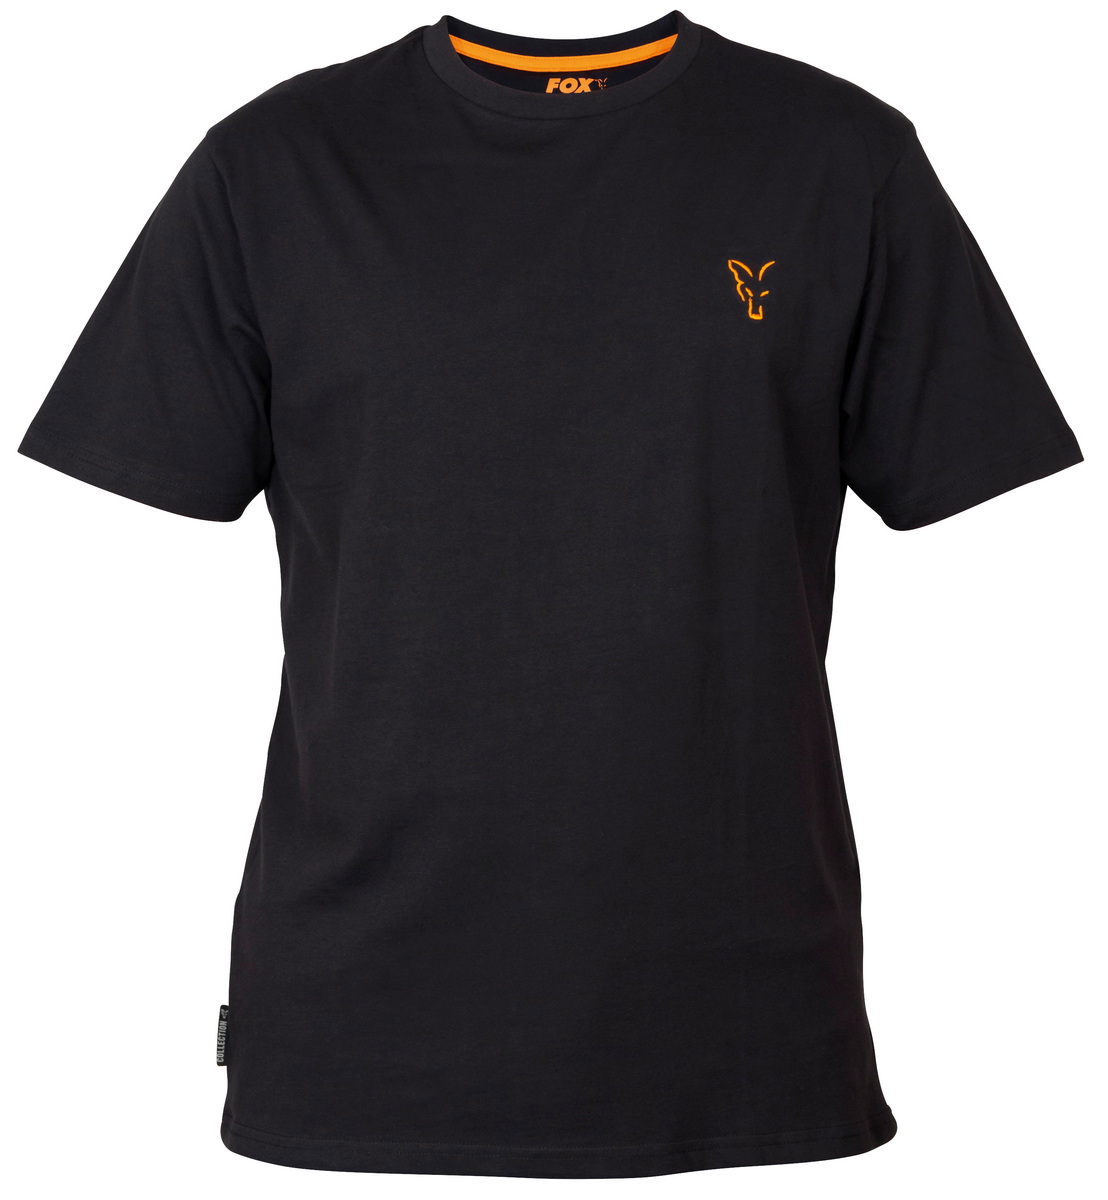 FOX collection Black / Orange T-shirt - M